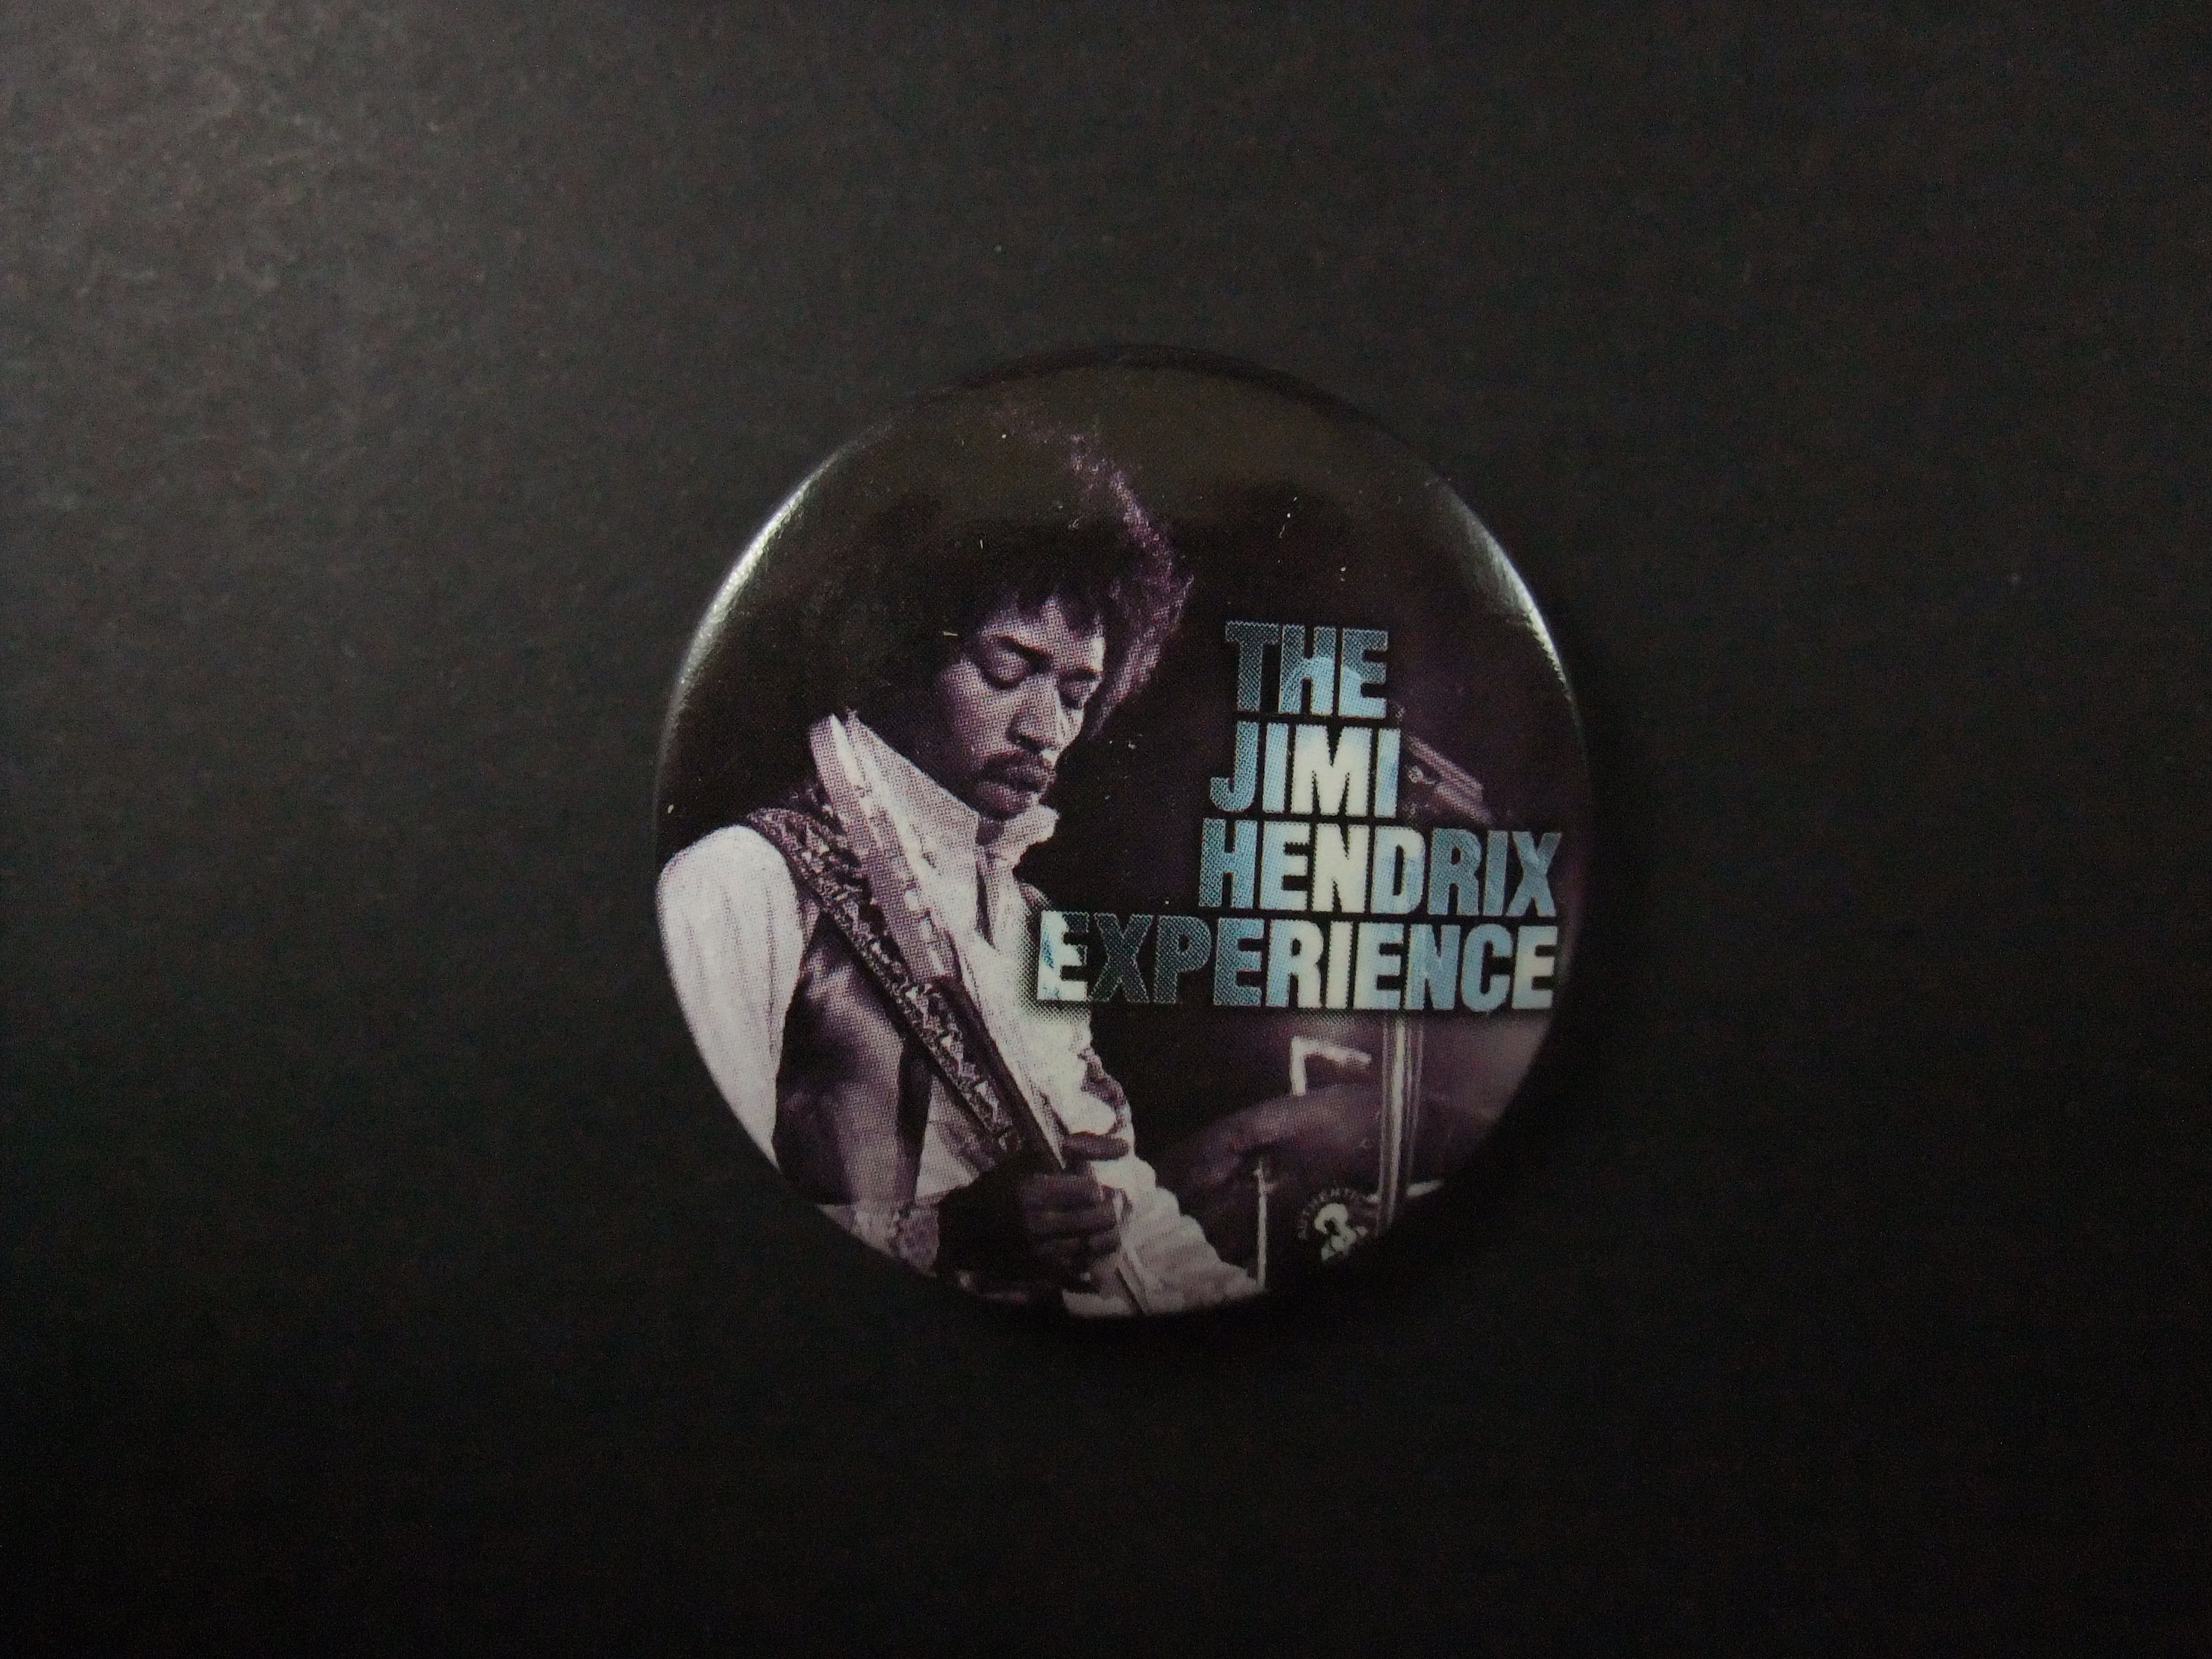 The Jimi Hendrix Experience (Noel Redding (bas) en Mitch Mitchell (drums) Purple Haze (1967)The Wind Cries Mary (1967) en Hey Joe'(1967)klassiekers in de rockhistorie